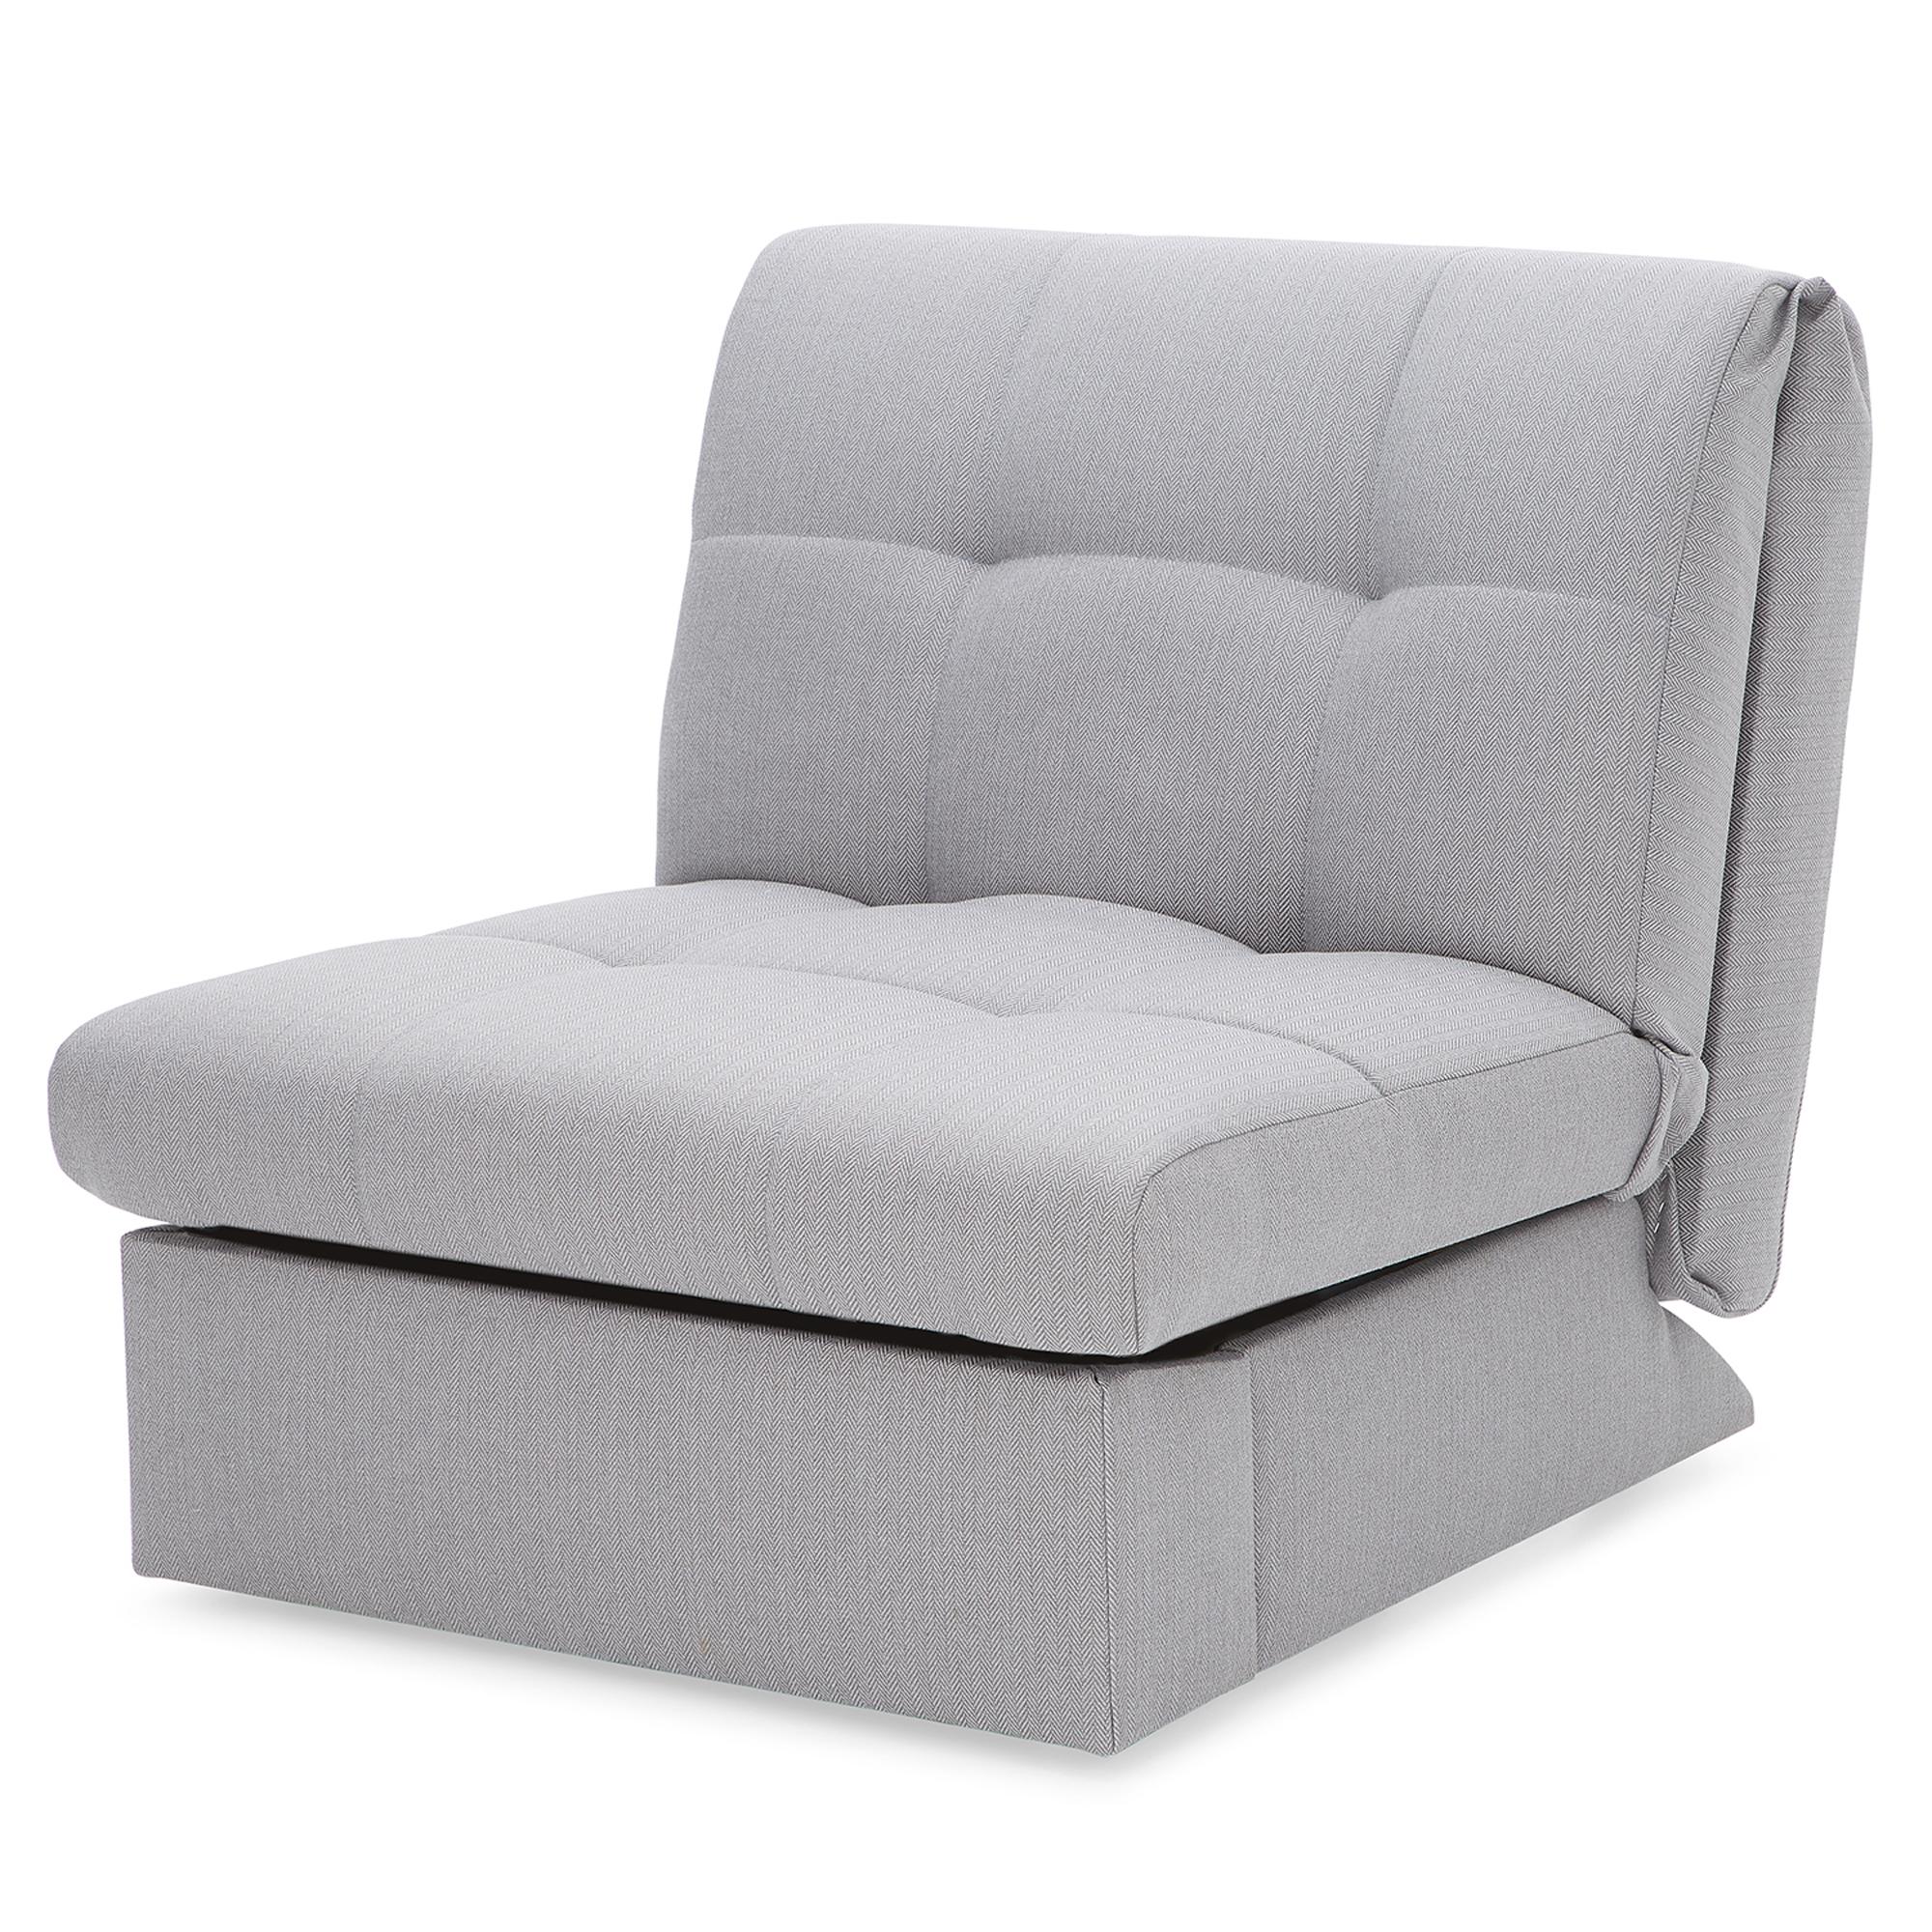 Grey Rowan Single Sofa Bed | Dunelm